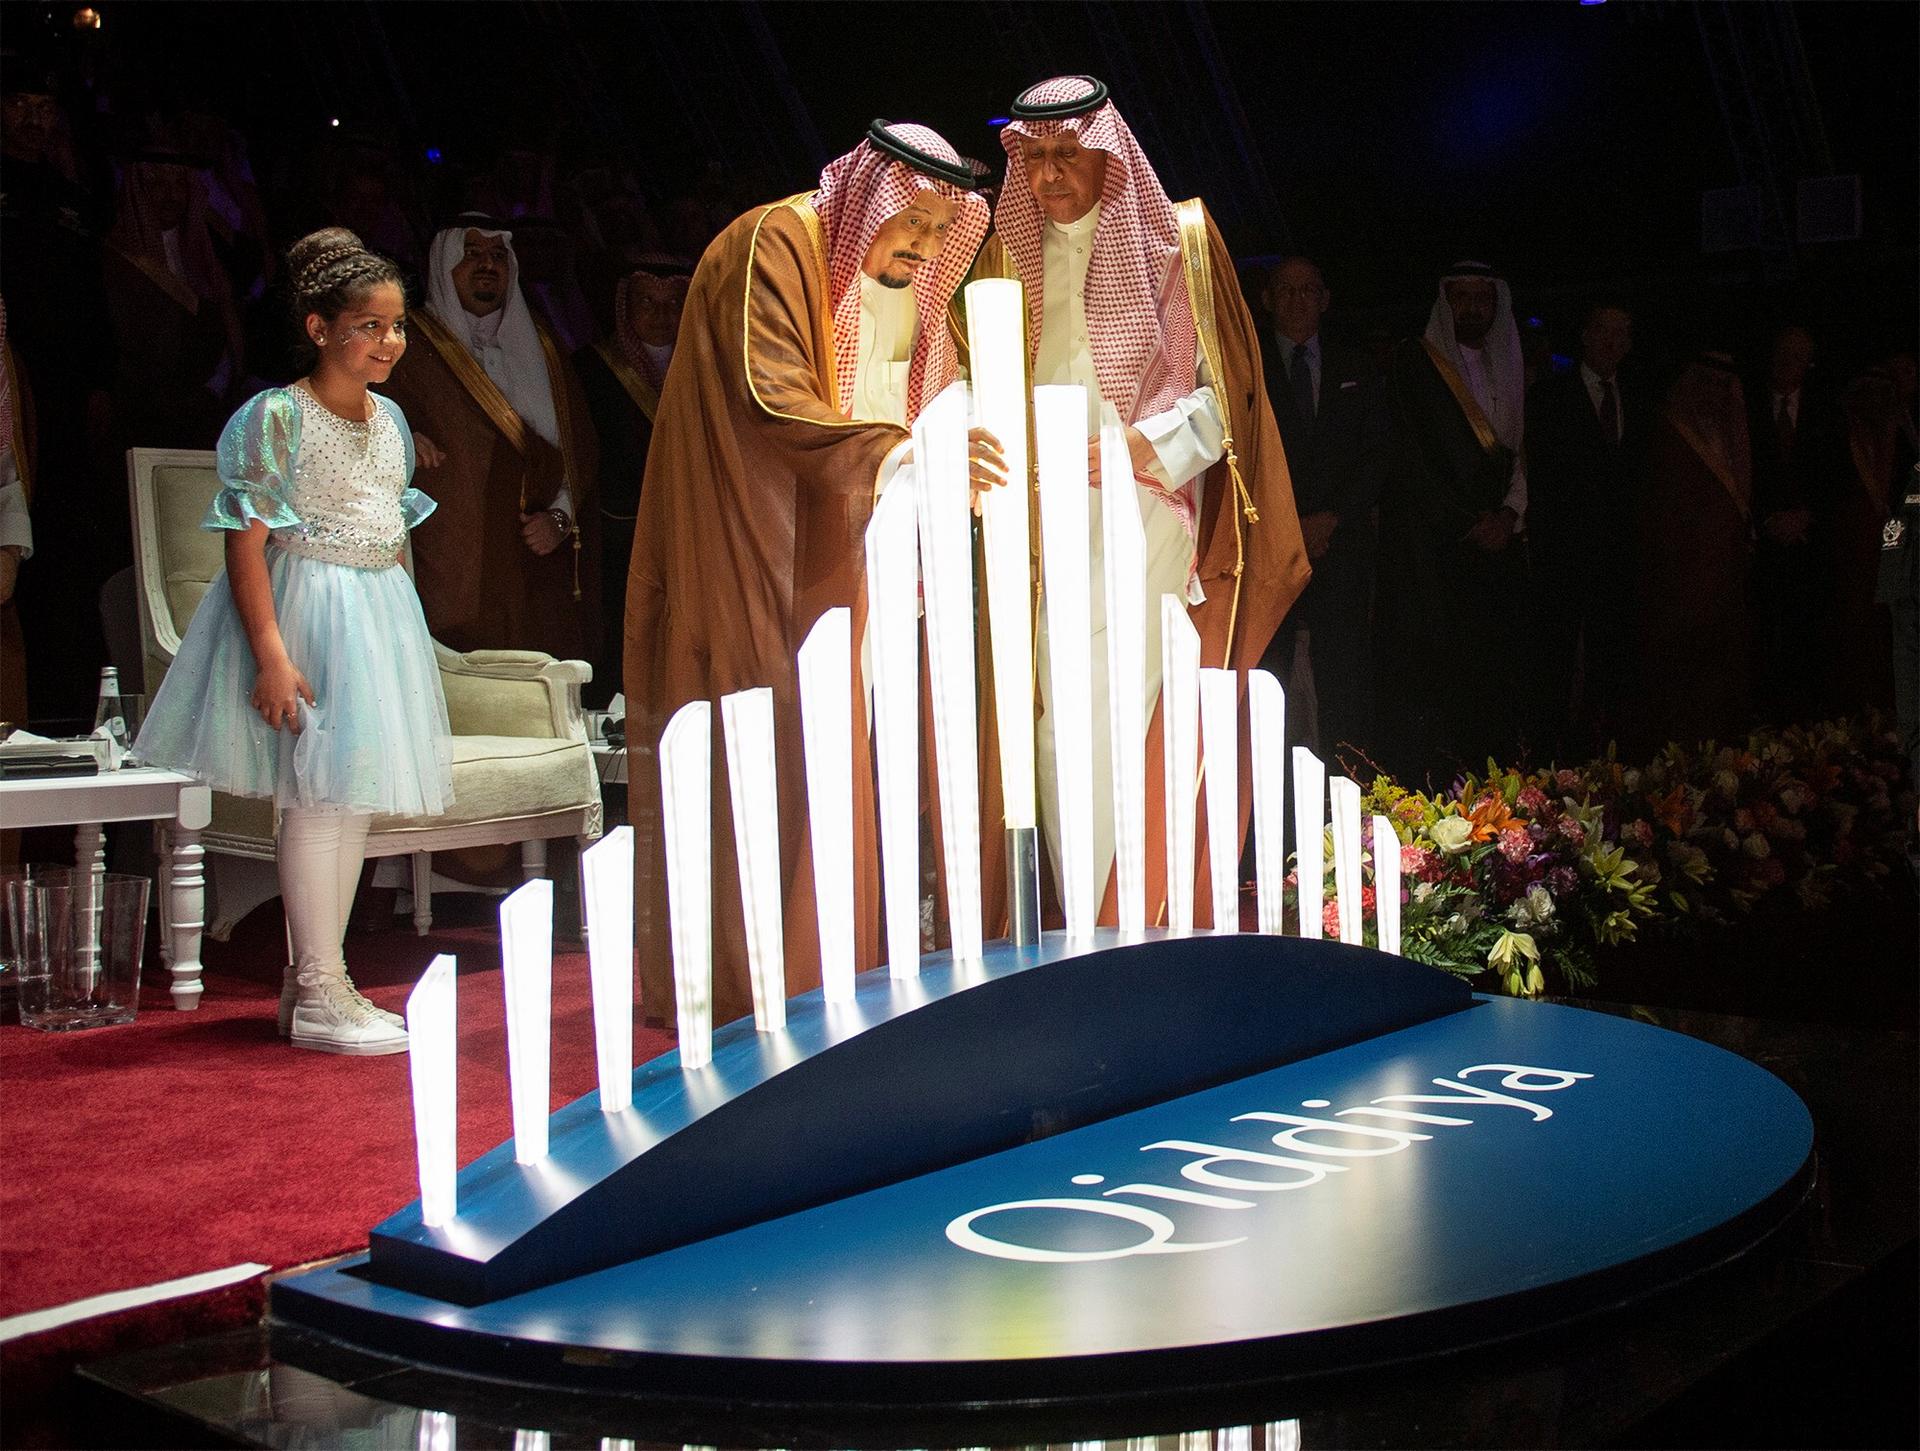 Saudi Arabia's King Salman bin Abdulaziz Al Saud takes part in the official announcement of Qiddiya, a multi-billion dollar entertainment resort being build outside Riyadh. It will be more than twice the size of Disney World. Picture taken April 28, 2018.